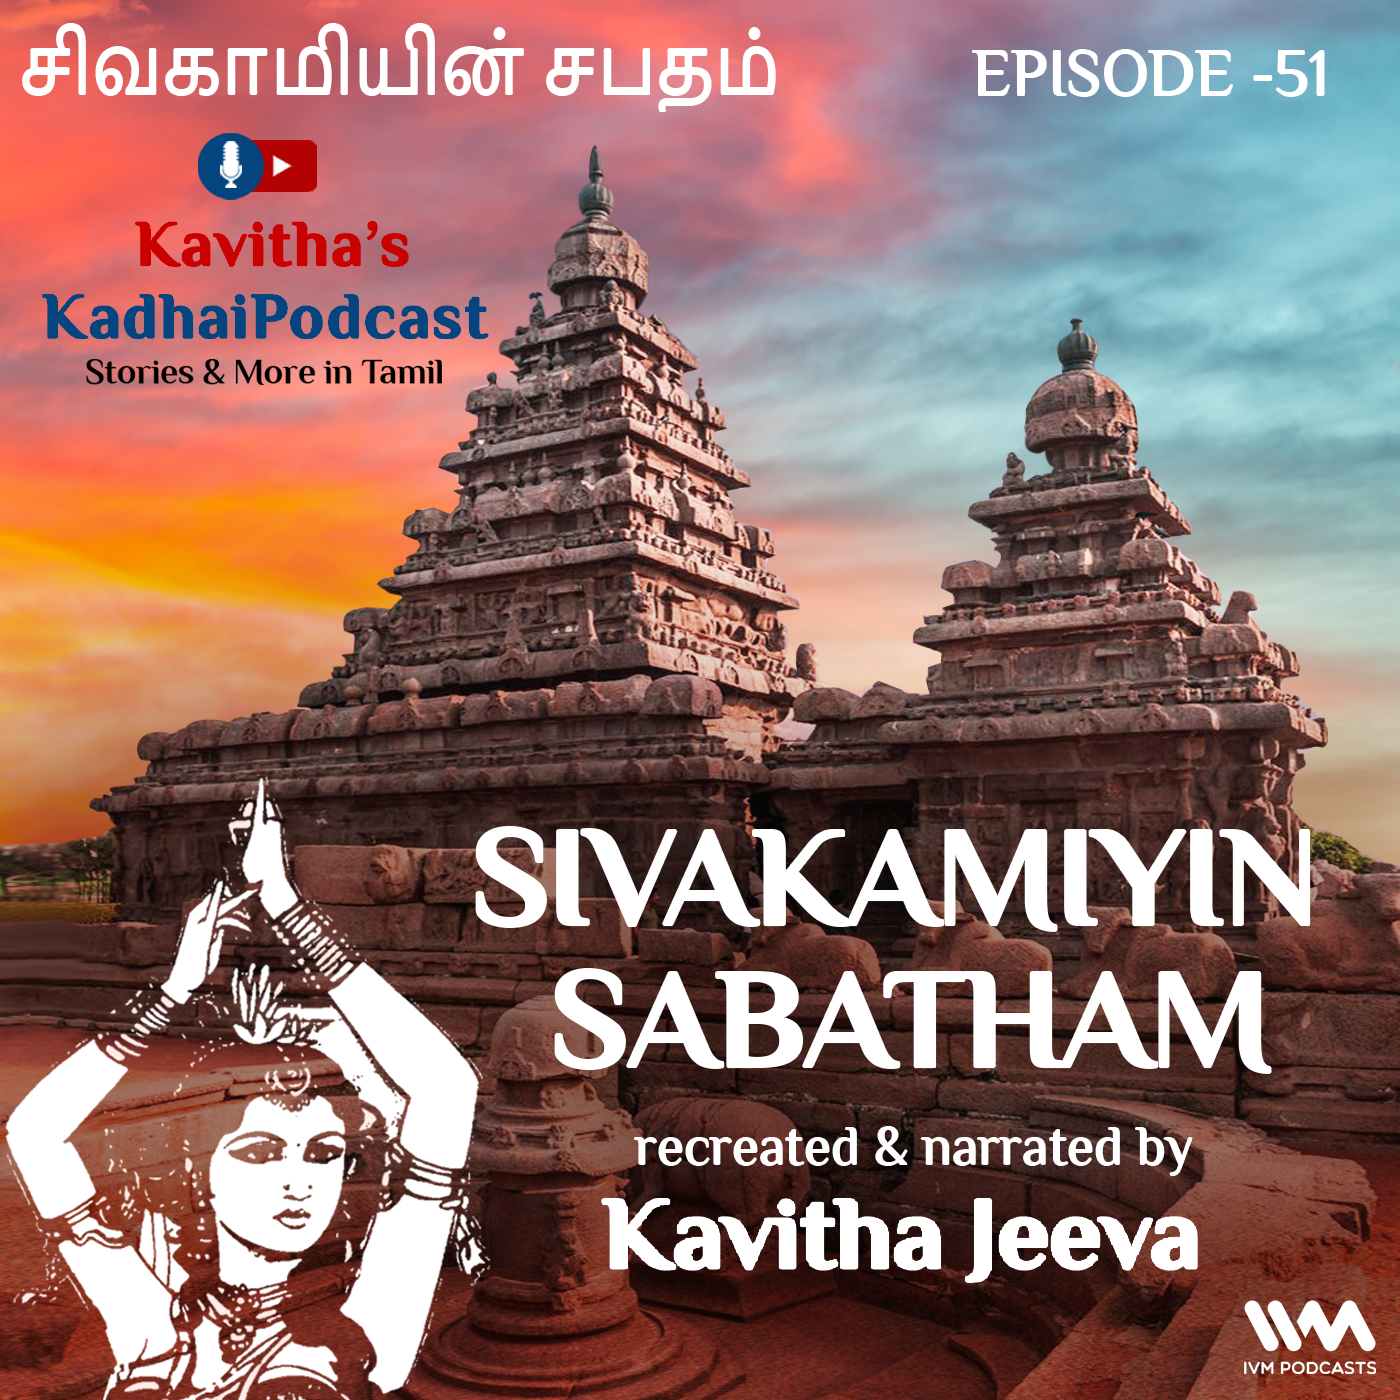 KadhaiPodcast's Sivakamiyin Sabatham - Episode # 51